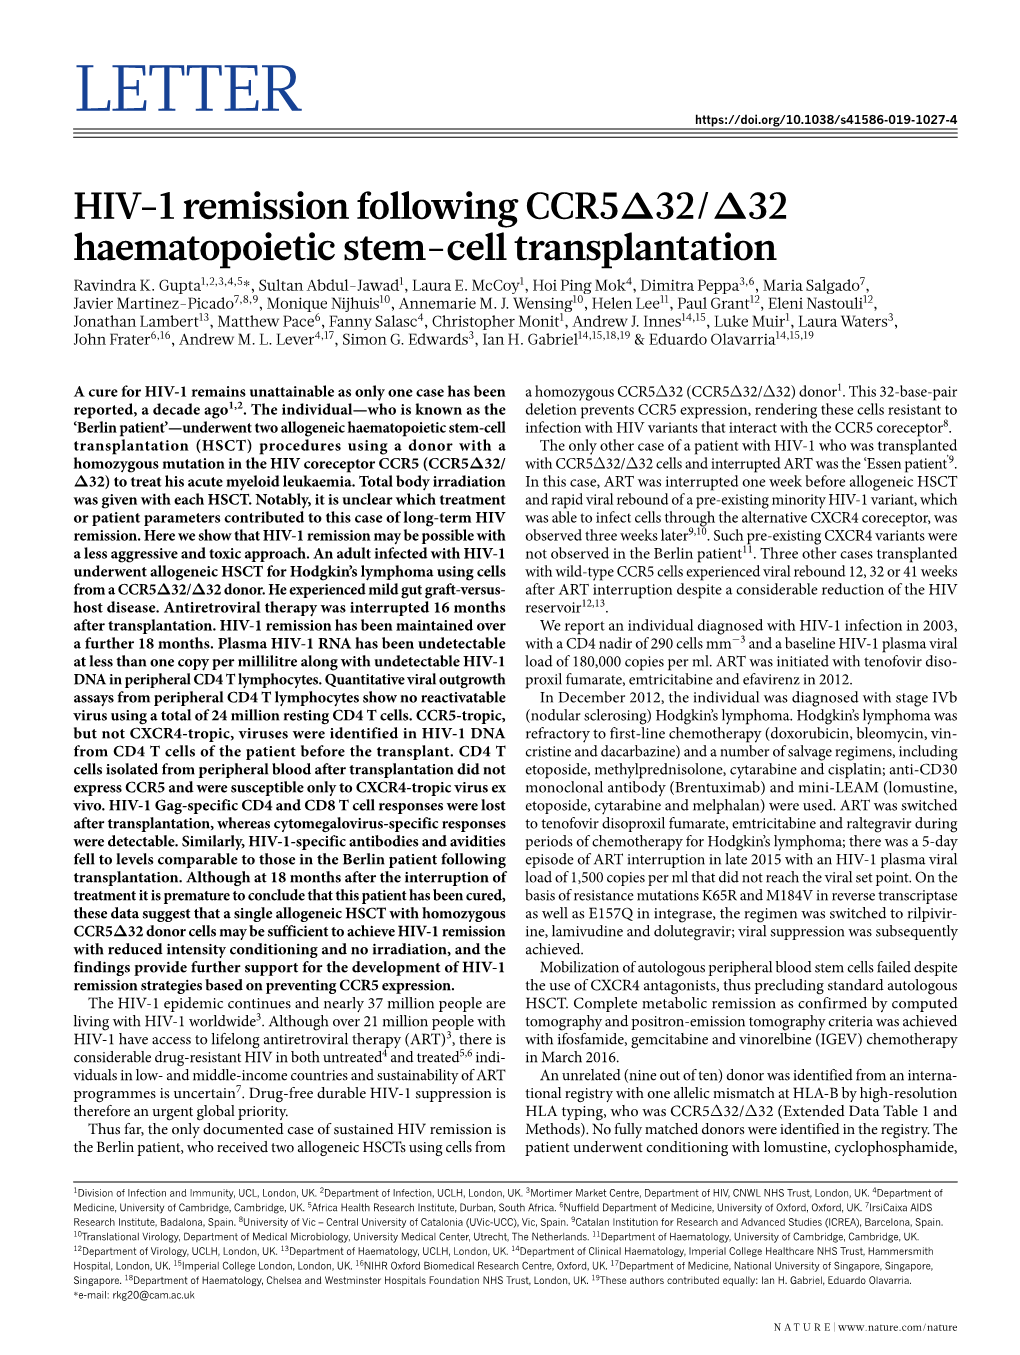 HIV-1 Remission Following CCR5Δ32/Δ32 Haematopoietic Stem-Cell Transplantation Ravindra K